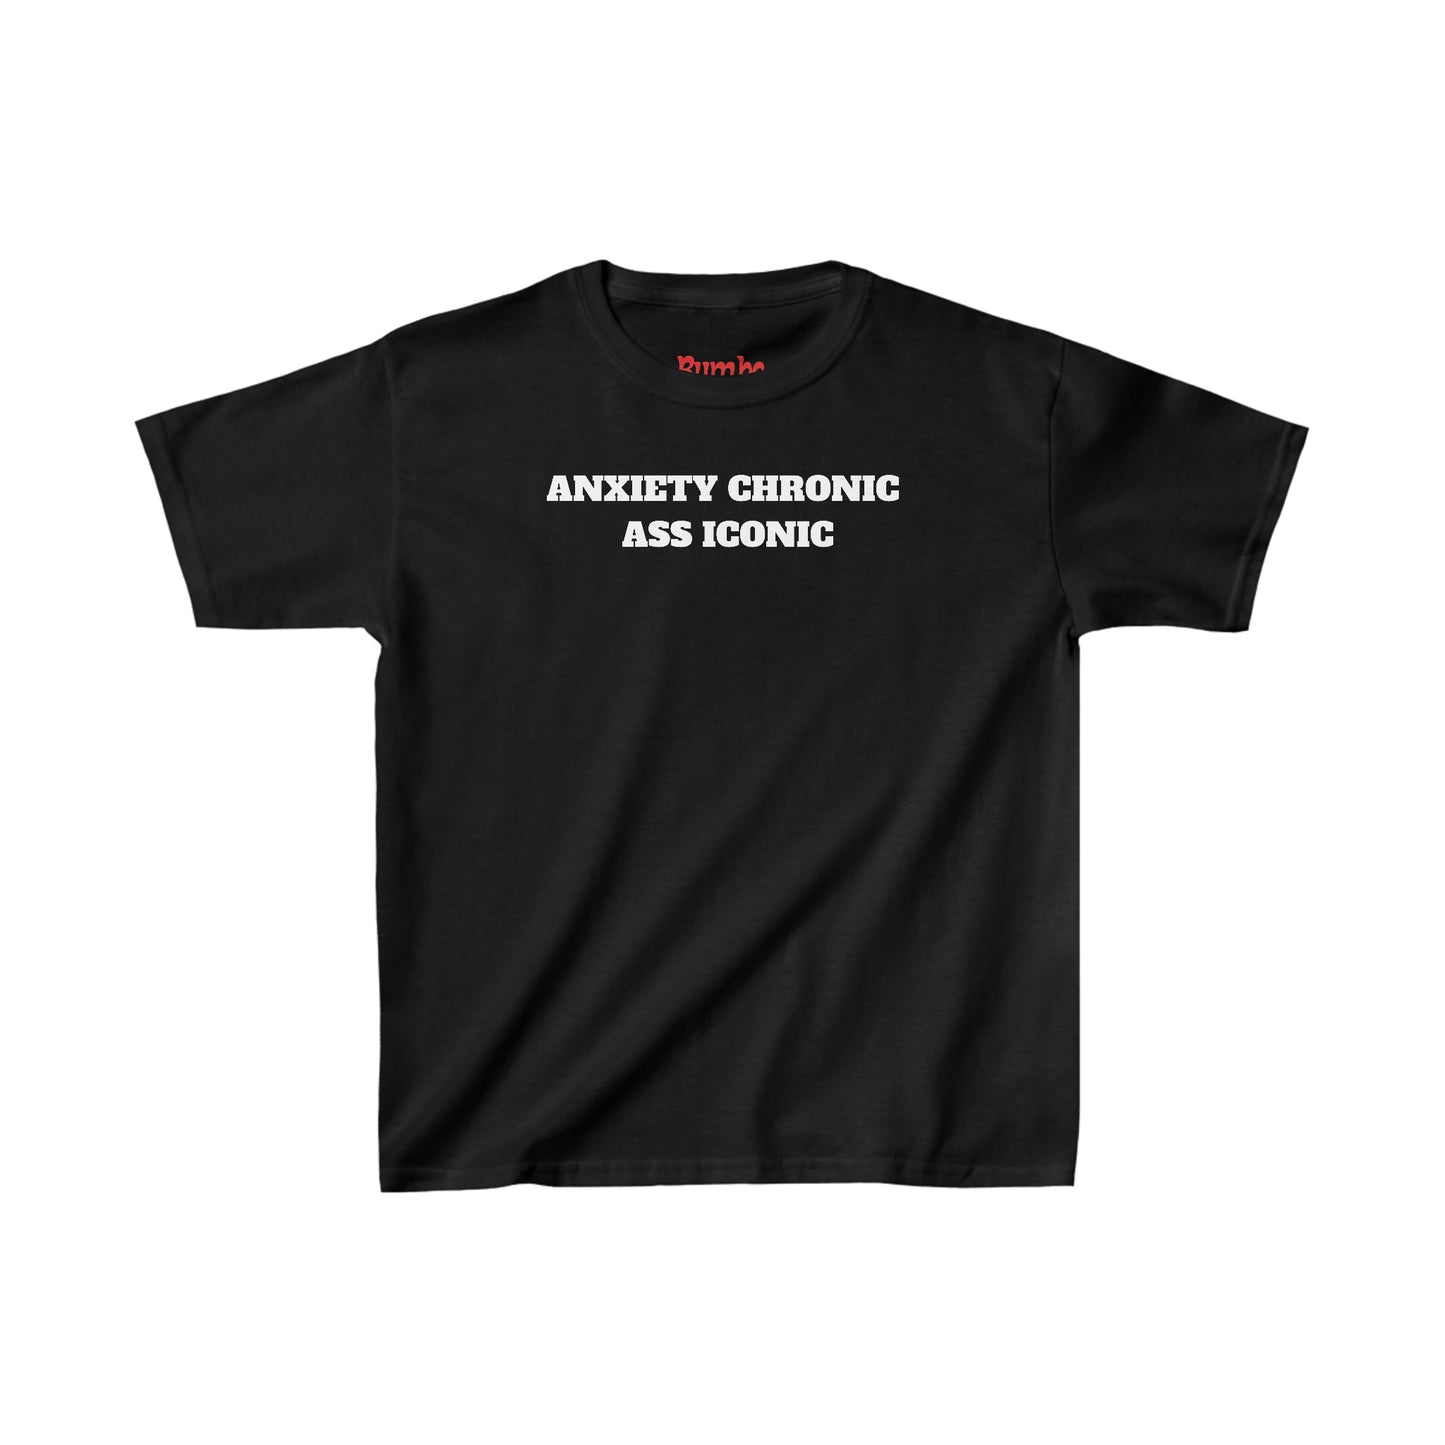 Anxiety Chronic Ass Iconic 90s Baby Tee